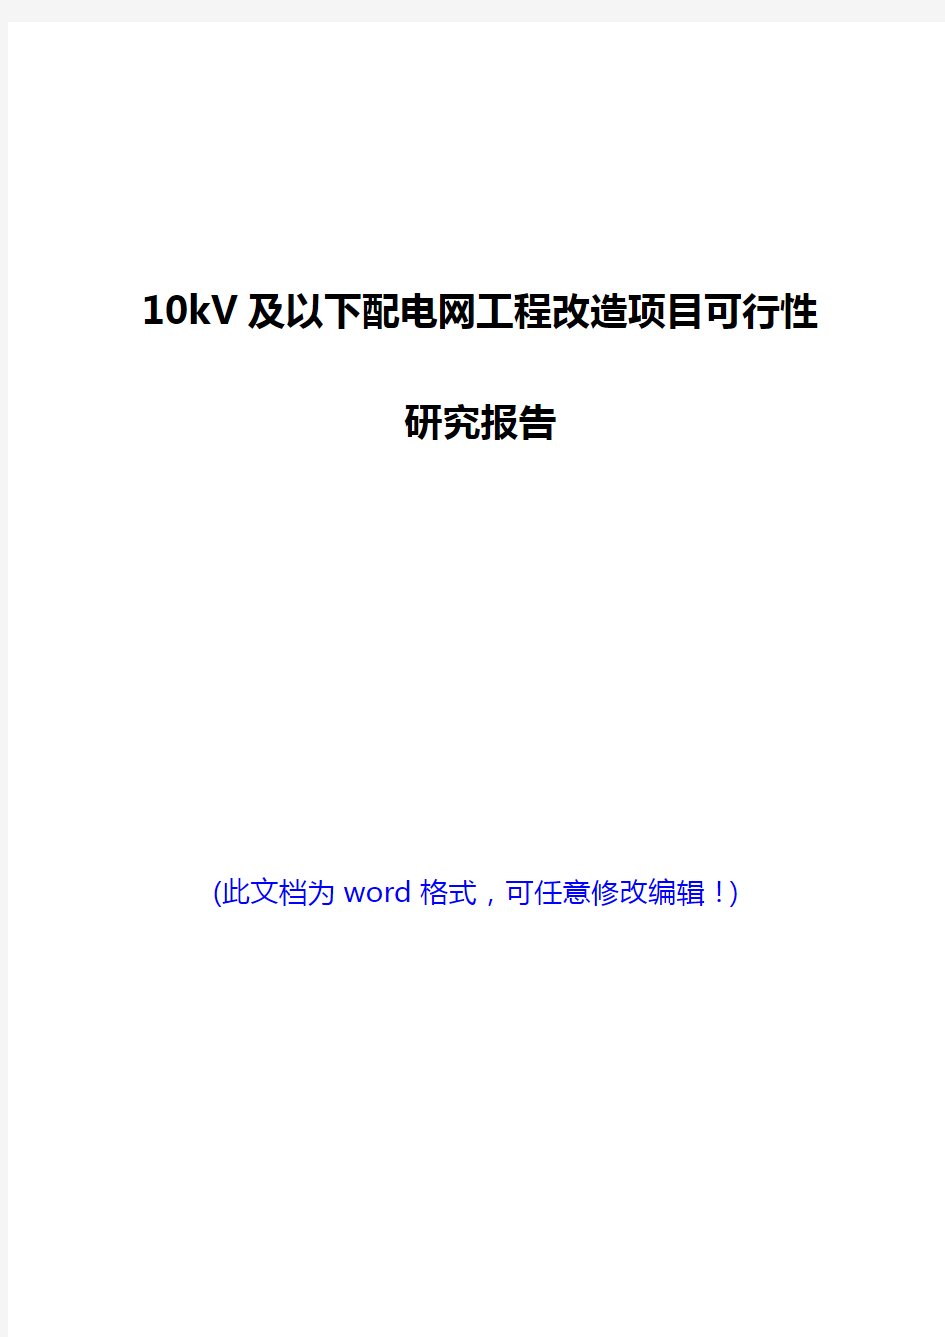 10kV及以下配电网工程改造项目可行性研究报告(完美版)